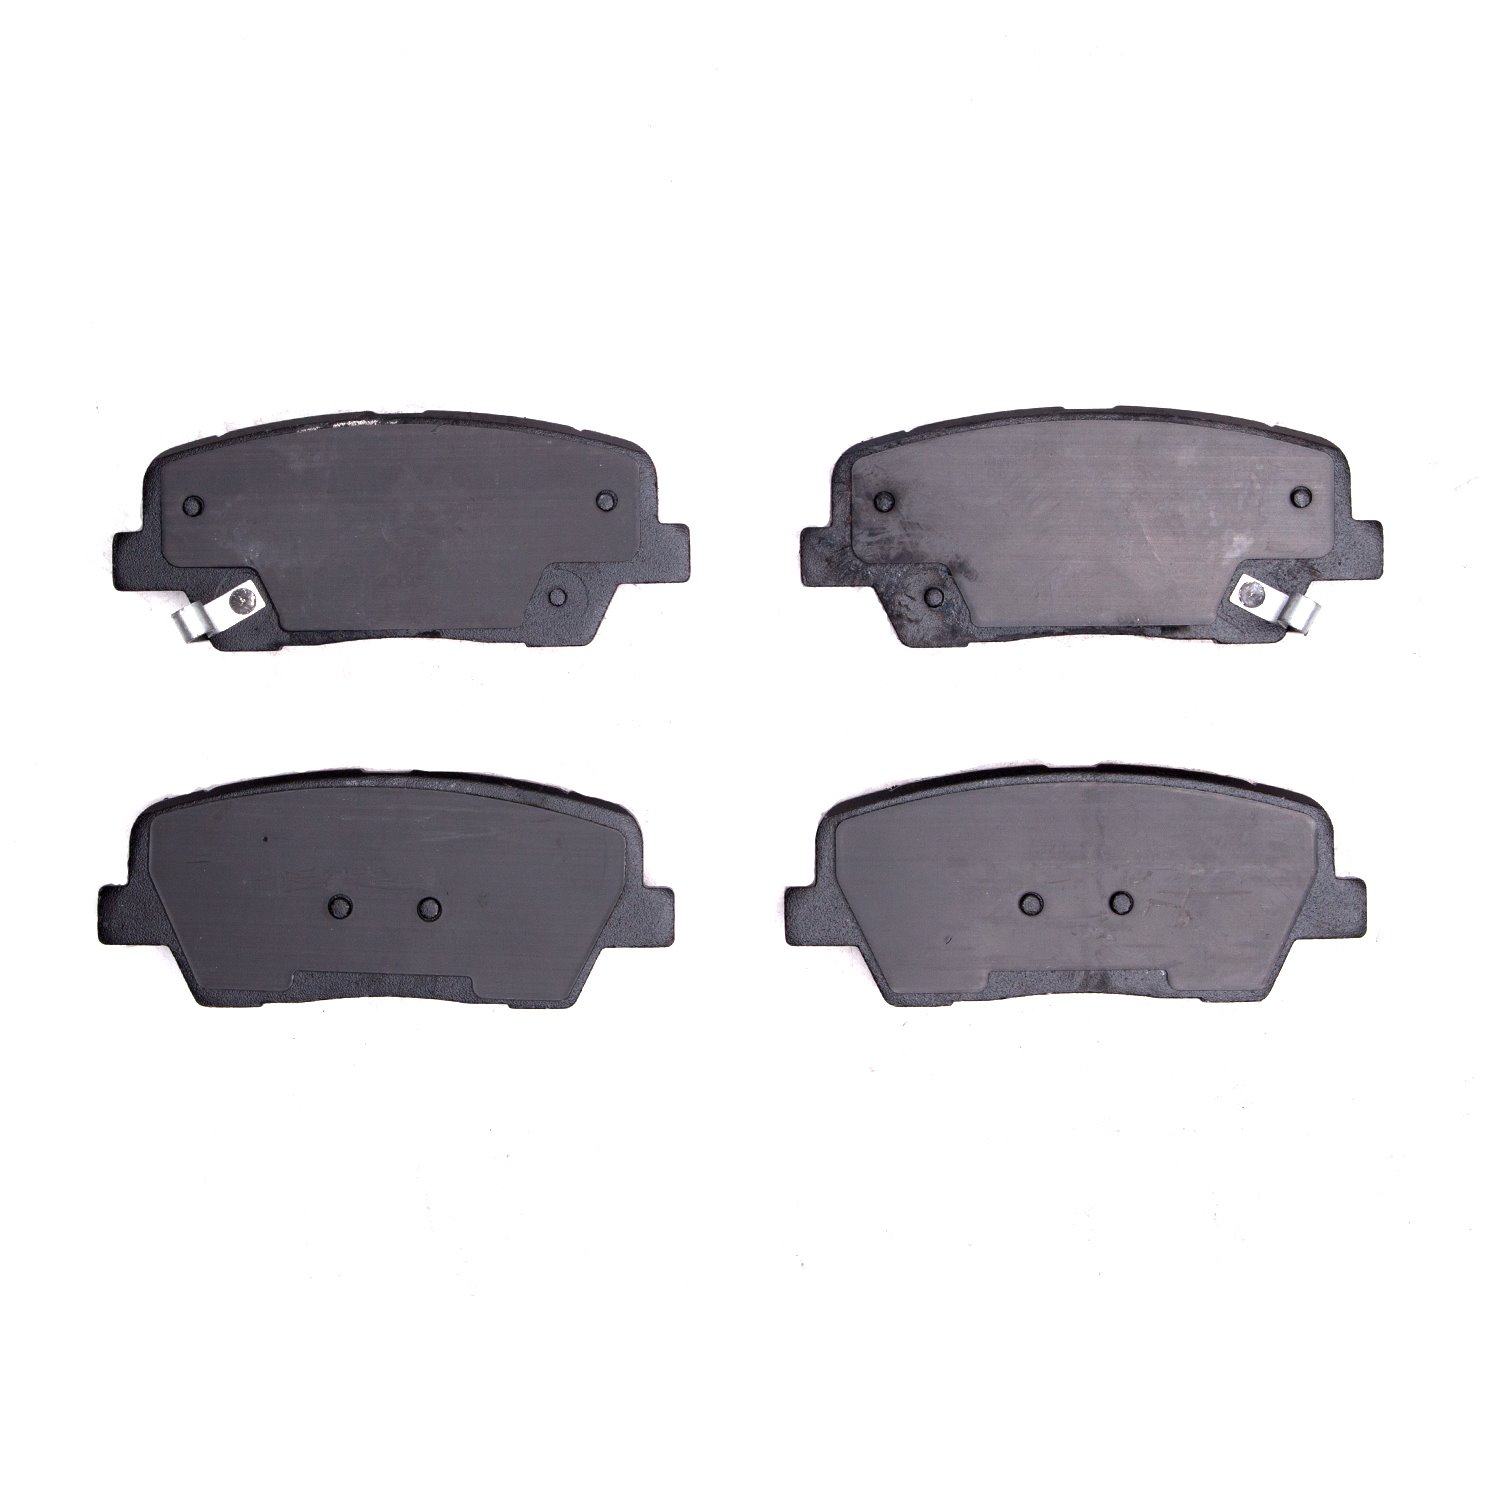 1310-1816-00 3000-Series Ceramic Brake Pads, Fits Select Kia/Hyundai/Genesis, Position: Rear